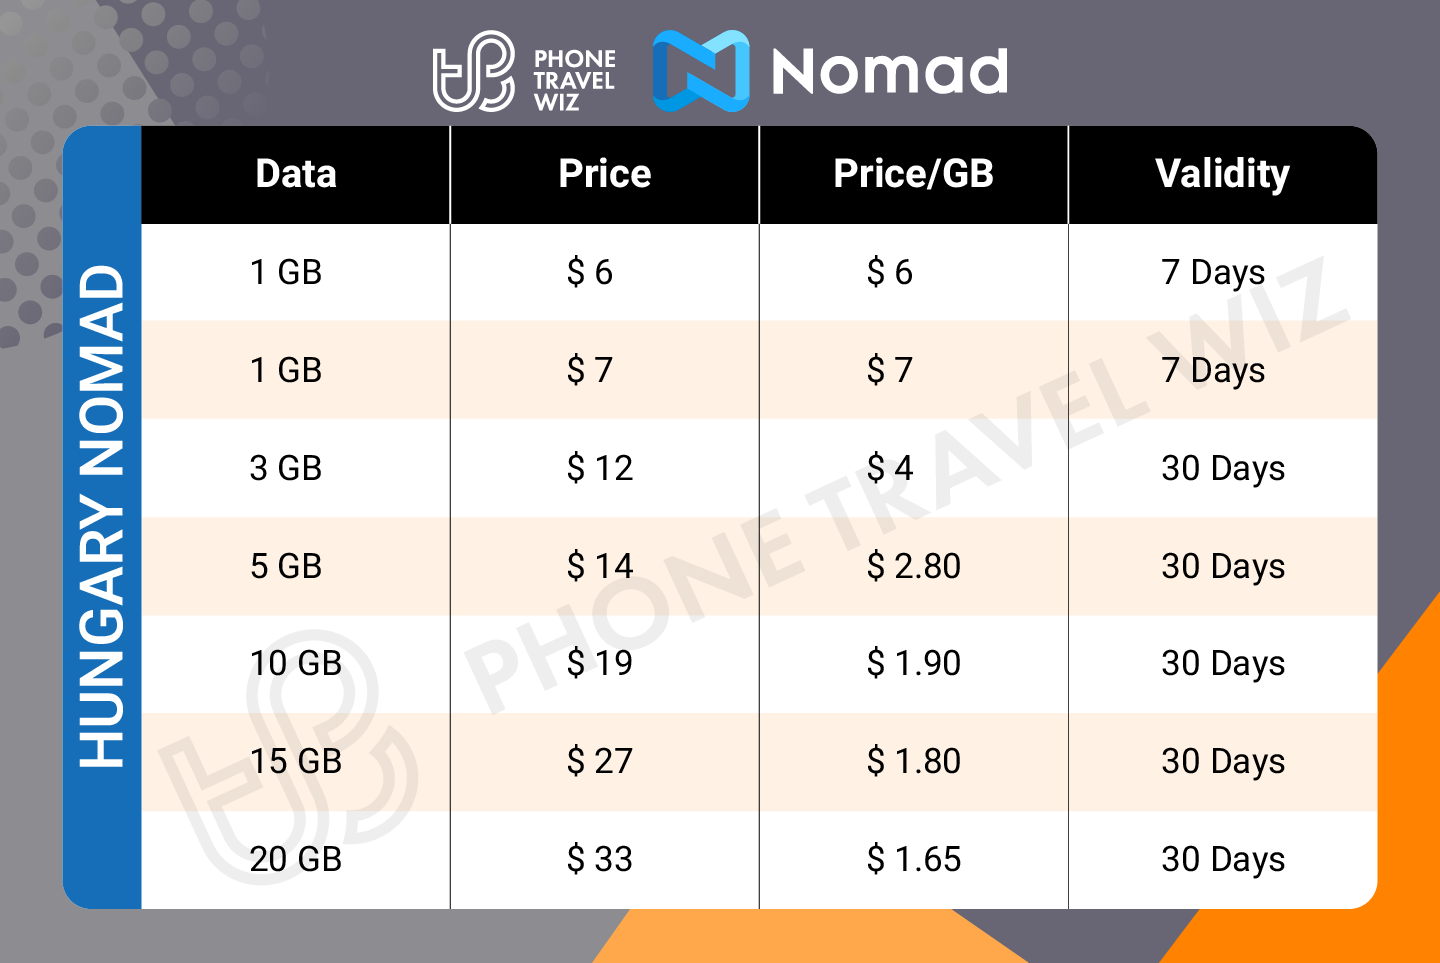 Nomad Hungary eSIM Price & Data Details Infographic by Phone Travel Wiz